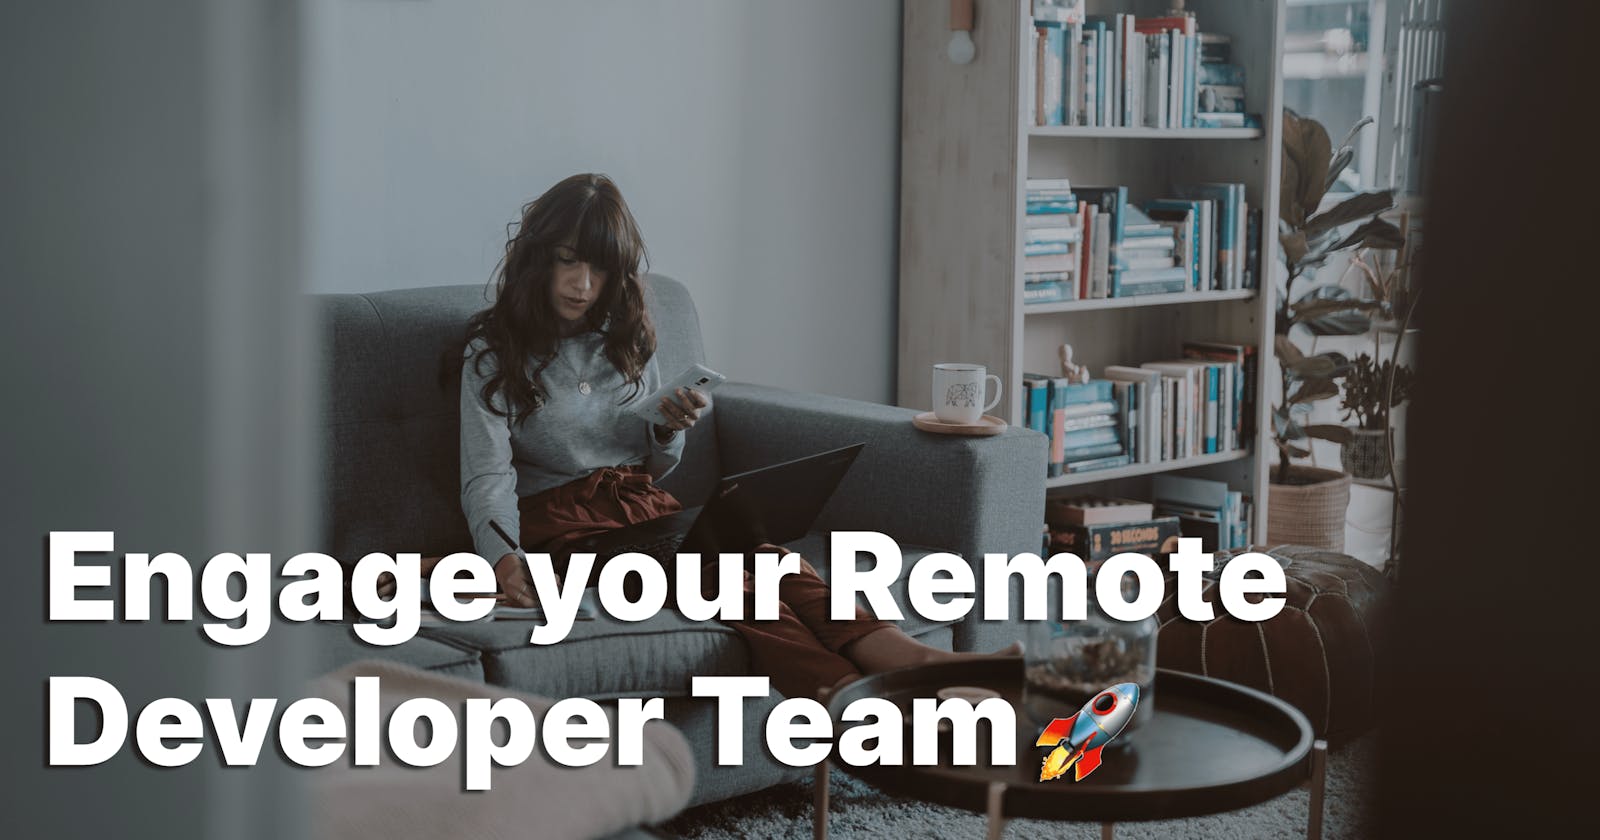 Remote Software Developer Team Engagement: 5 Easy Ways